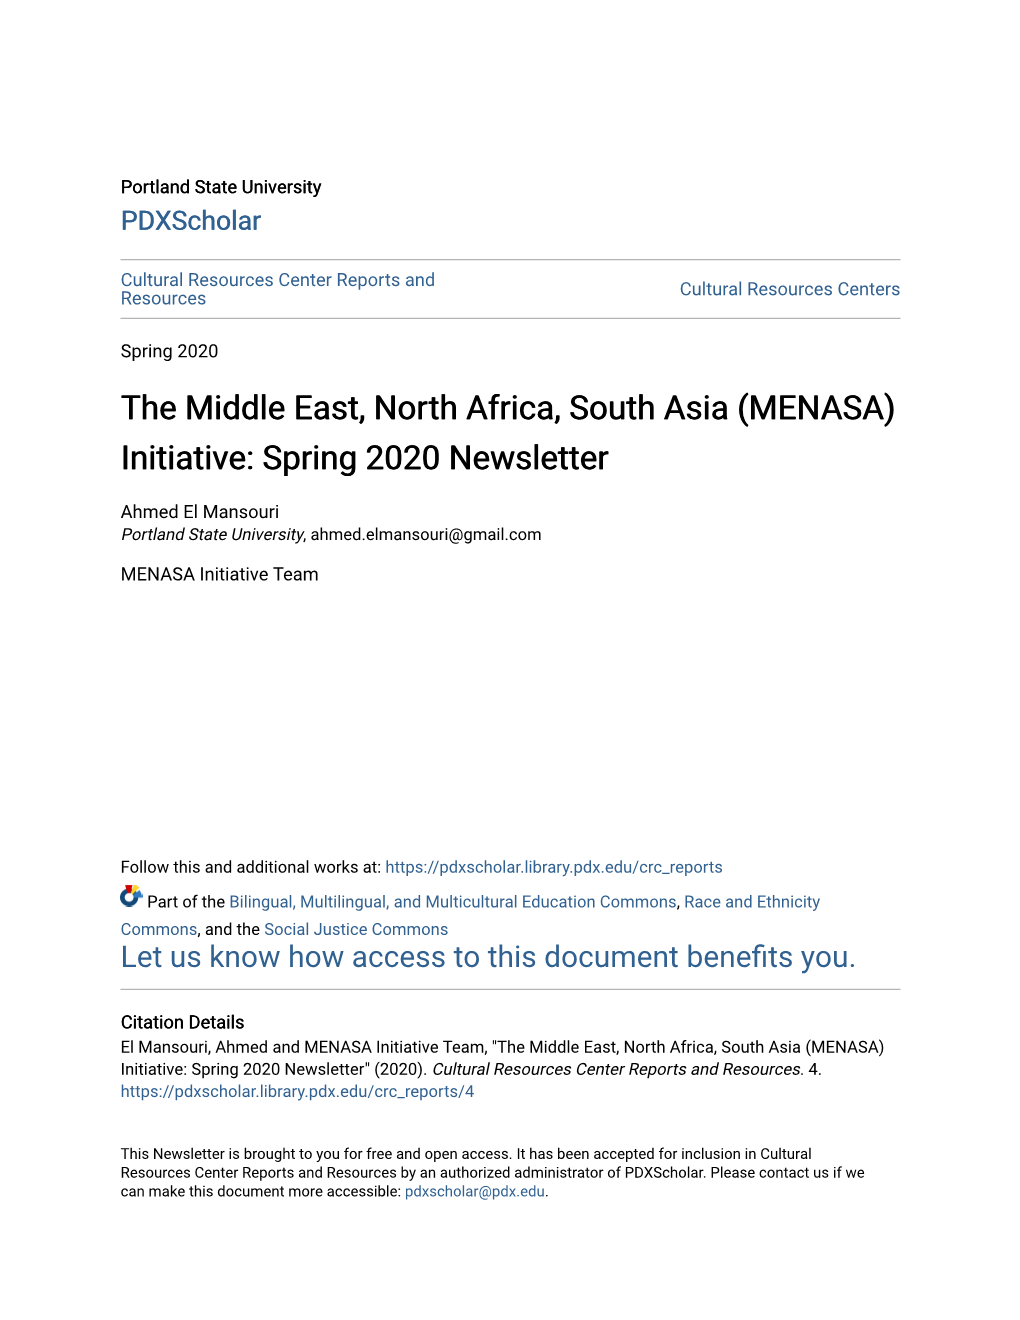 (MENASA) Initiative: Spring 2020 Newsletter